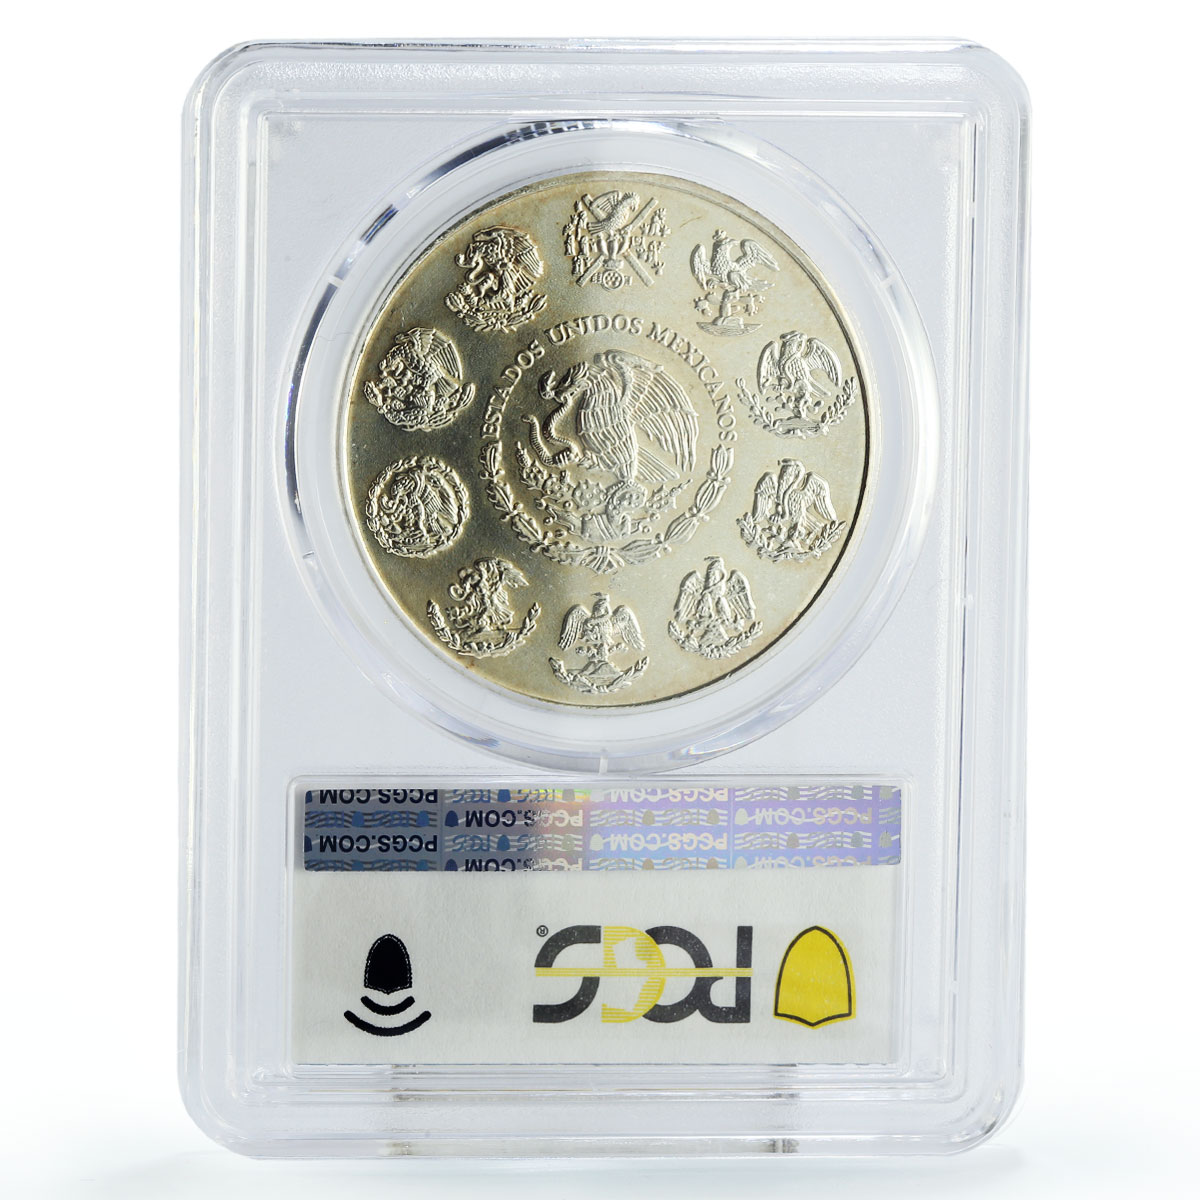 Mexico 5 pesos Conservation Wildlife Crocodile Fauna MS67 PCGS silver coin 2000